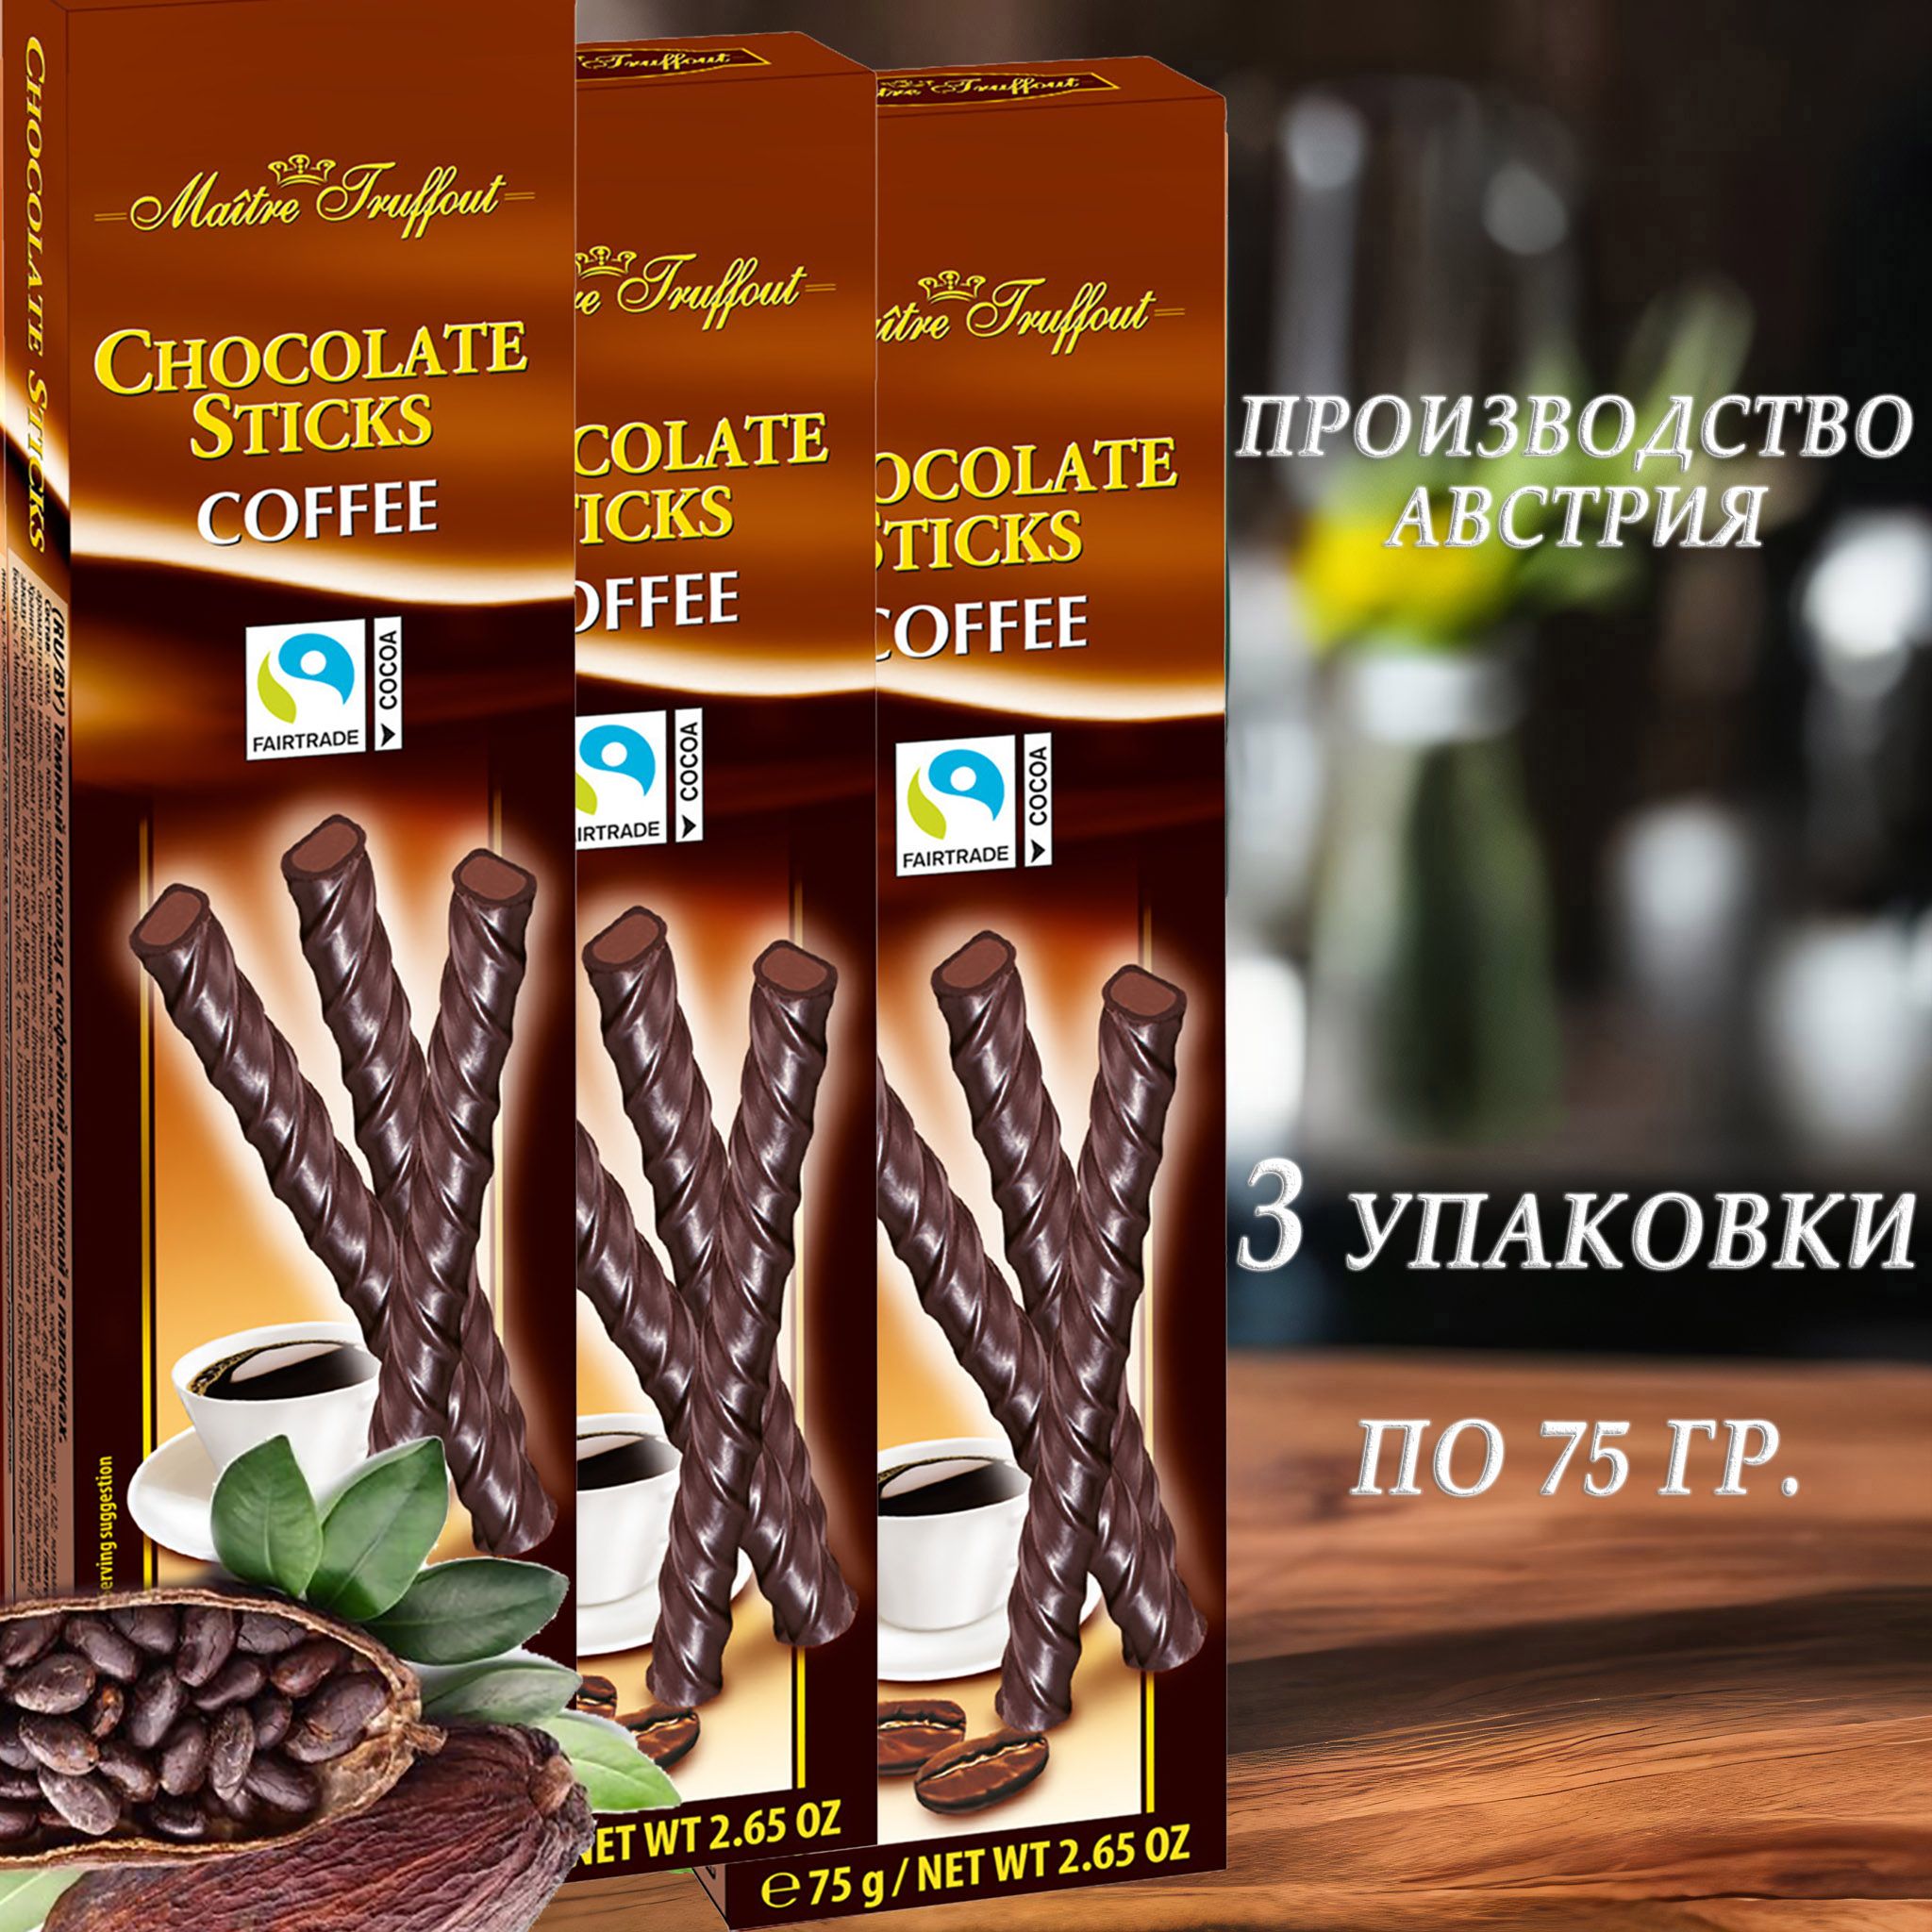 Шоколадные палочки Maitre Truffout, со вкусом какао бобов, 75 г х 3 шт